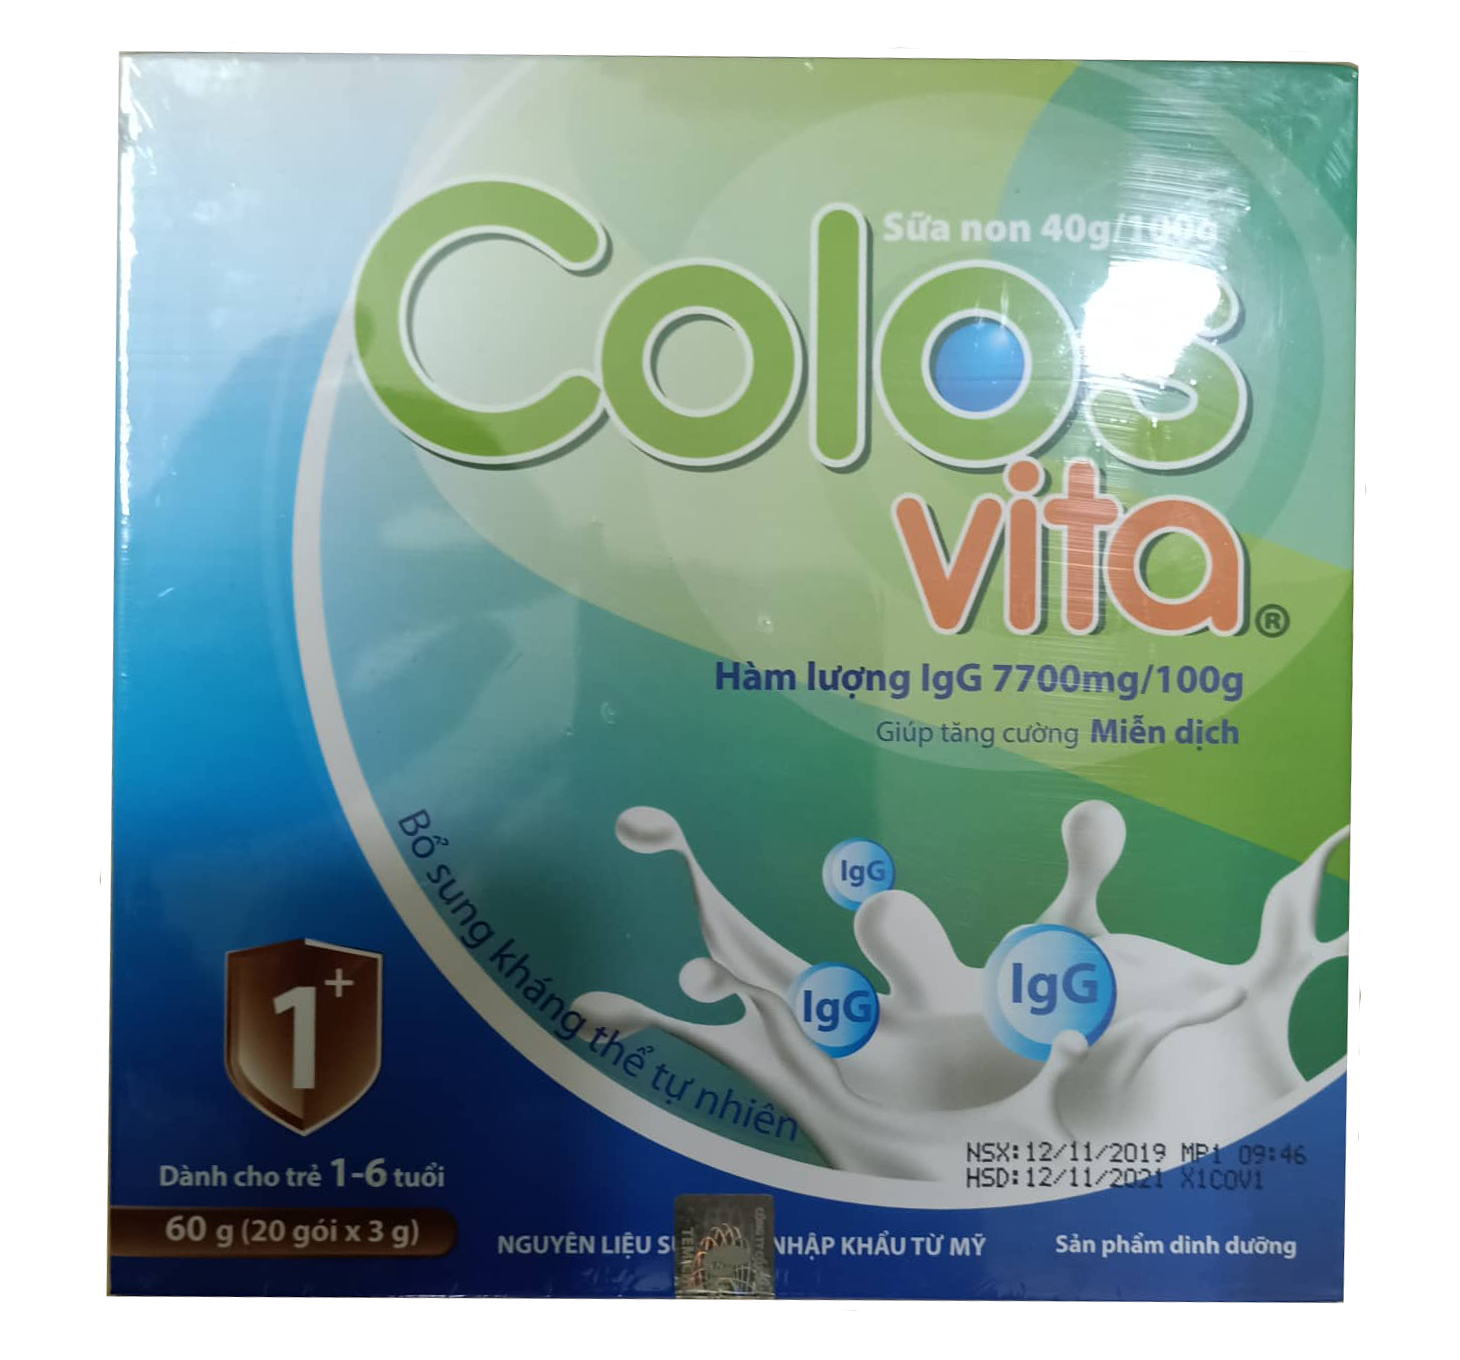 Sữa non Colosvita cho trẻ từ 1-6 tuổi mẫu mới